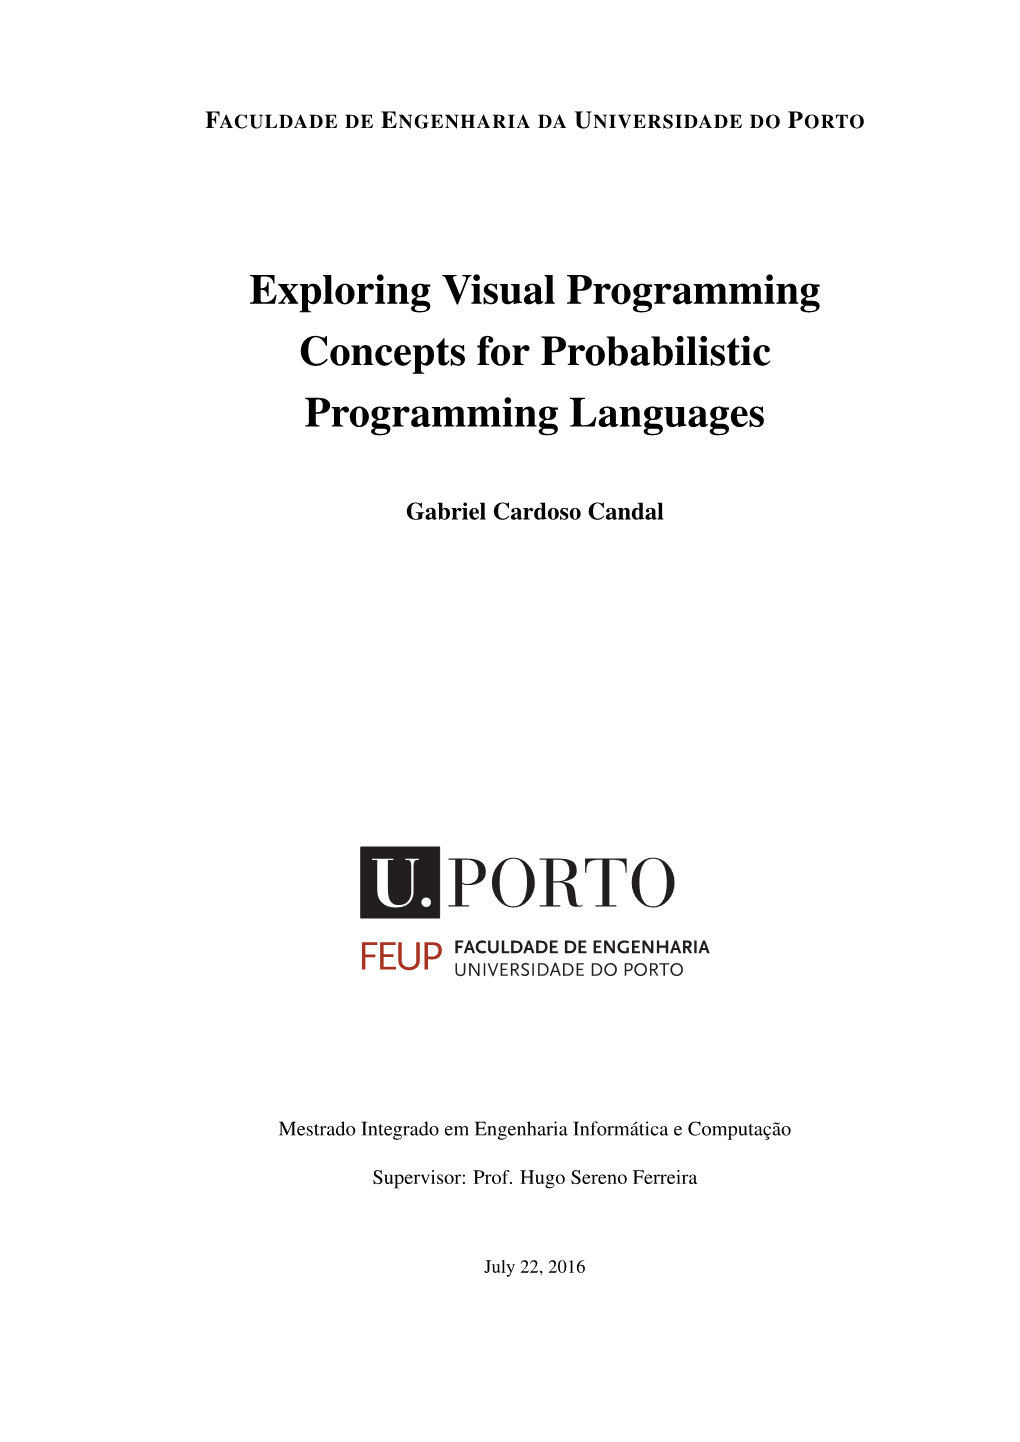 Exploring Visual Programming Concepts for Probabilistic Programming Languages